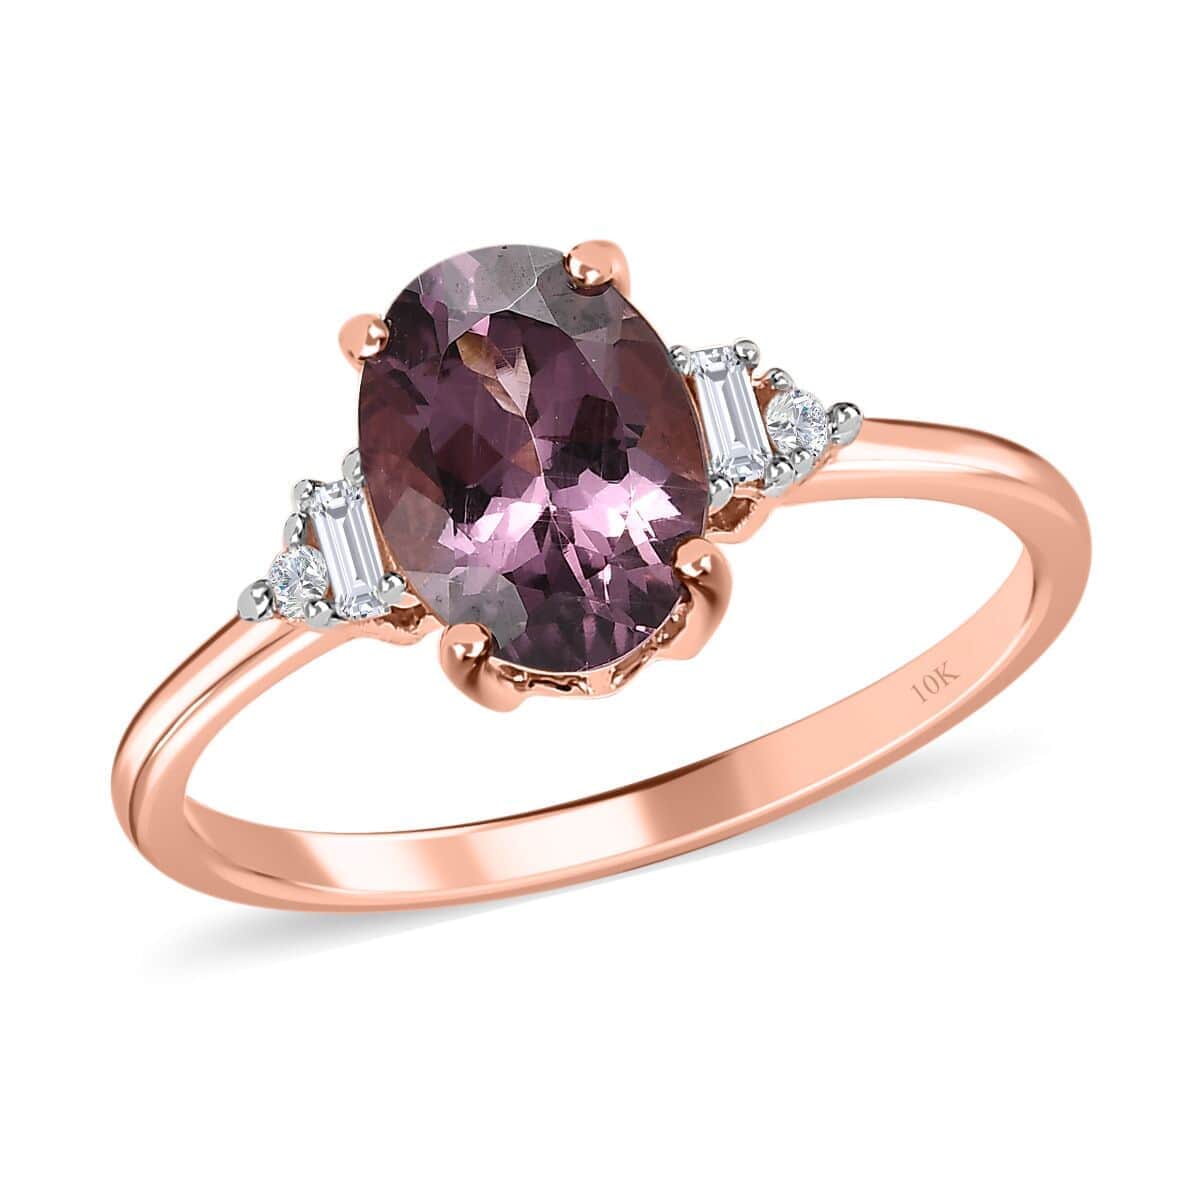 Luxoro 10K Rose Gold Premium Narsipatnam Purple Spinel and G-H I3 Diamond Ring (Size 8.0) 1.75 ctw image number 0